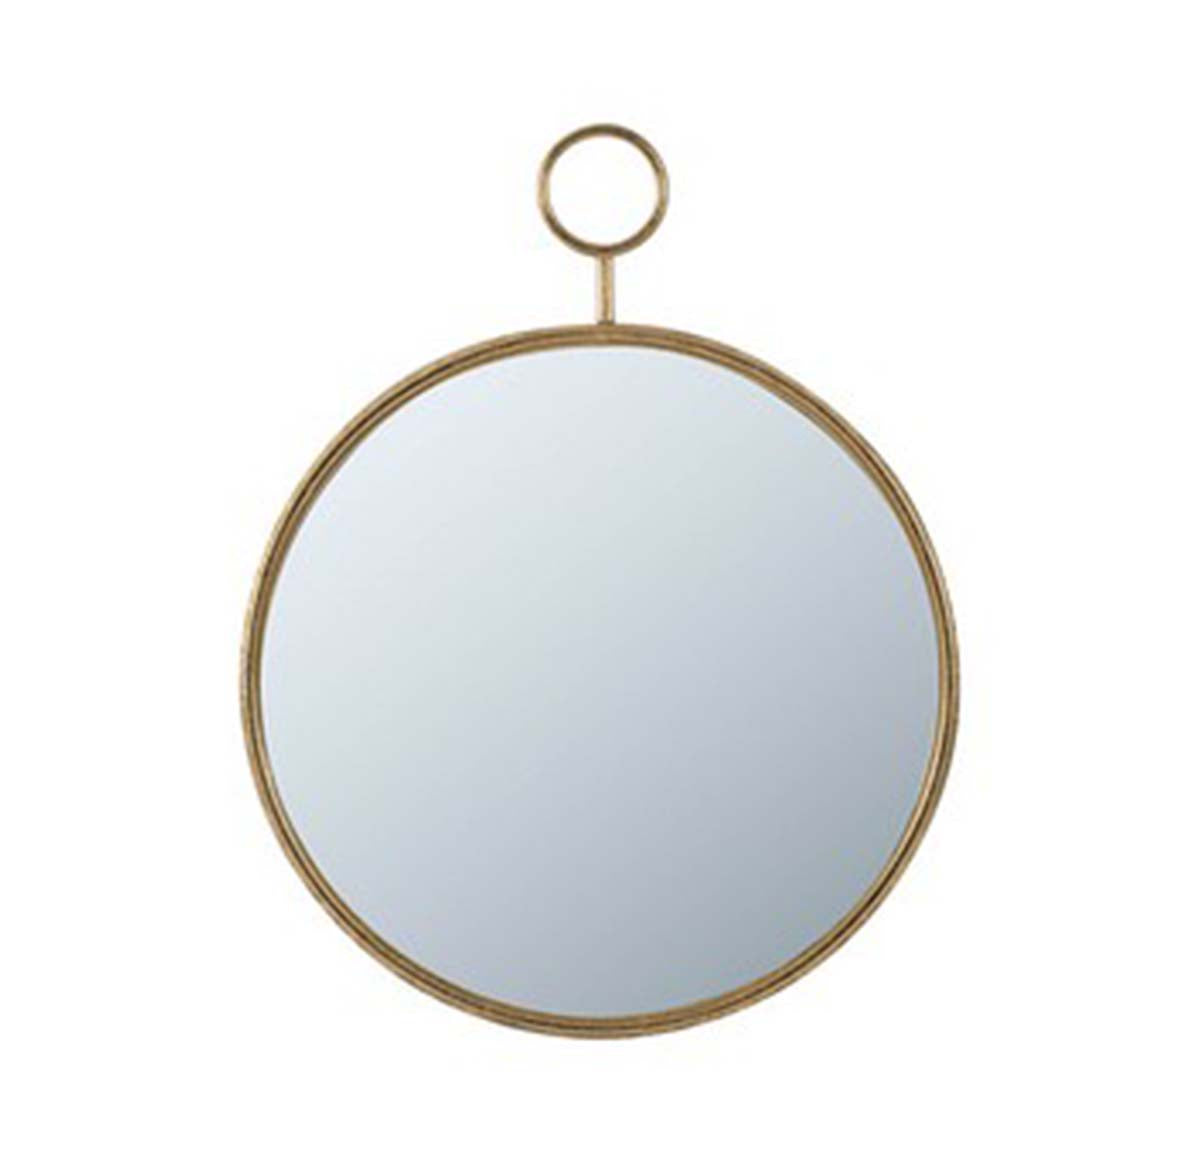 26" Elegance Round Wall Hanging Mirror - Gold